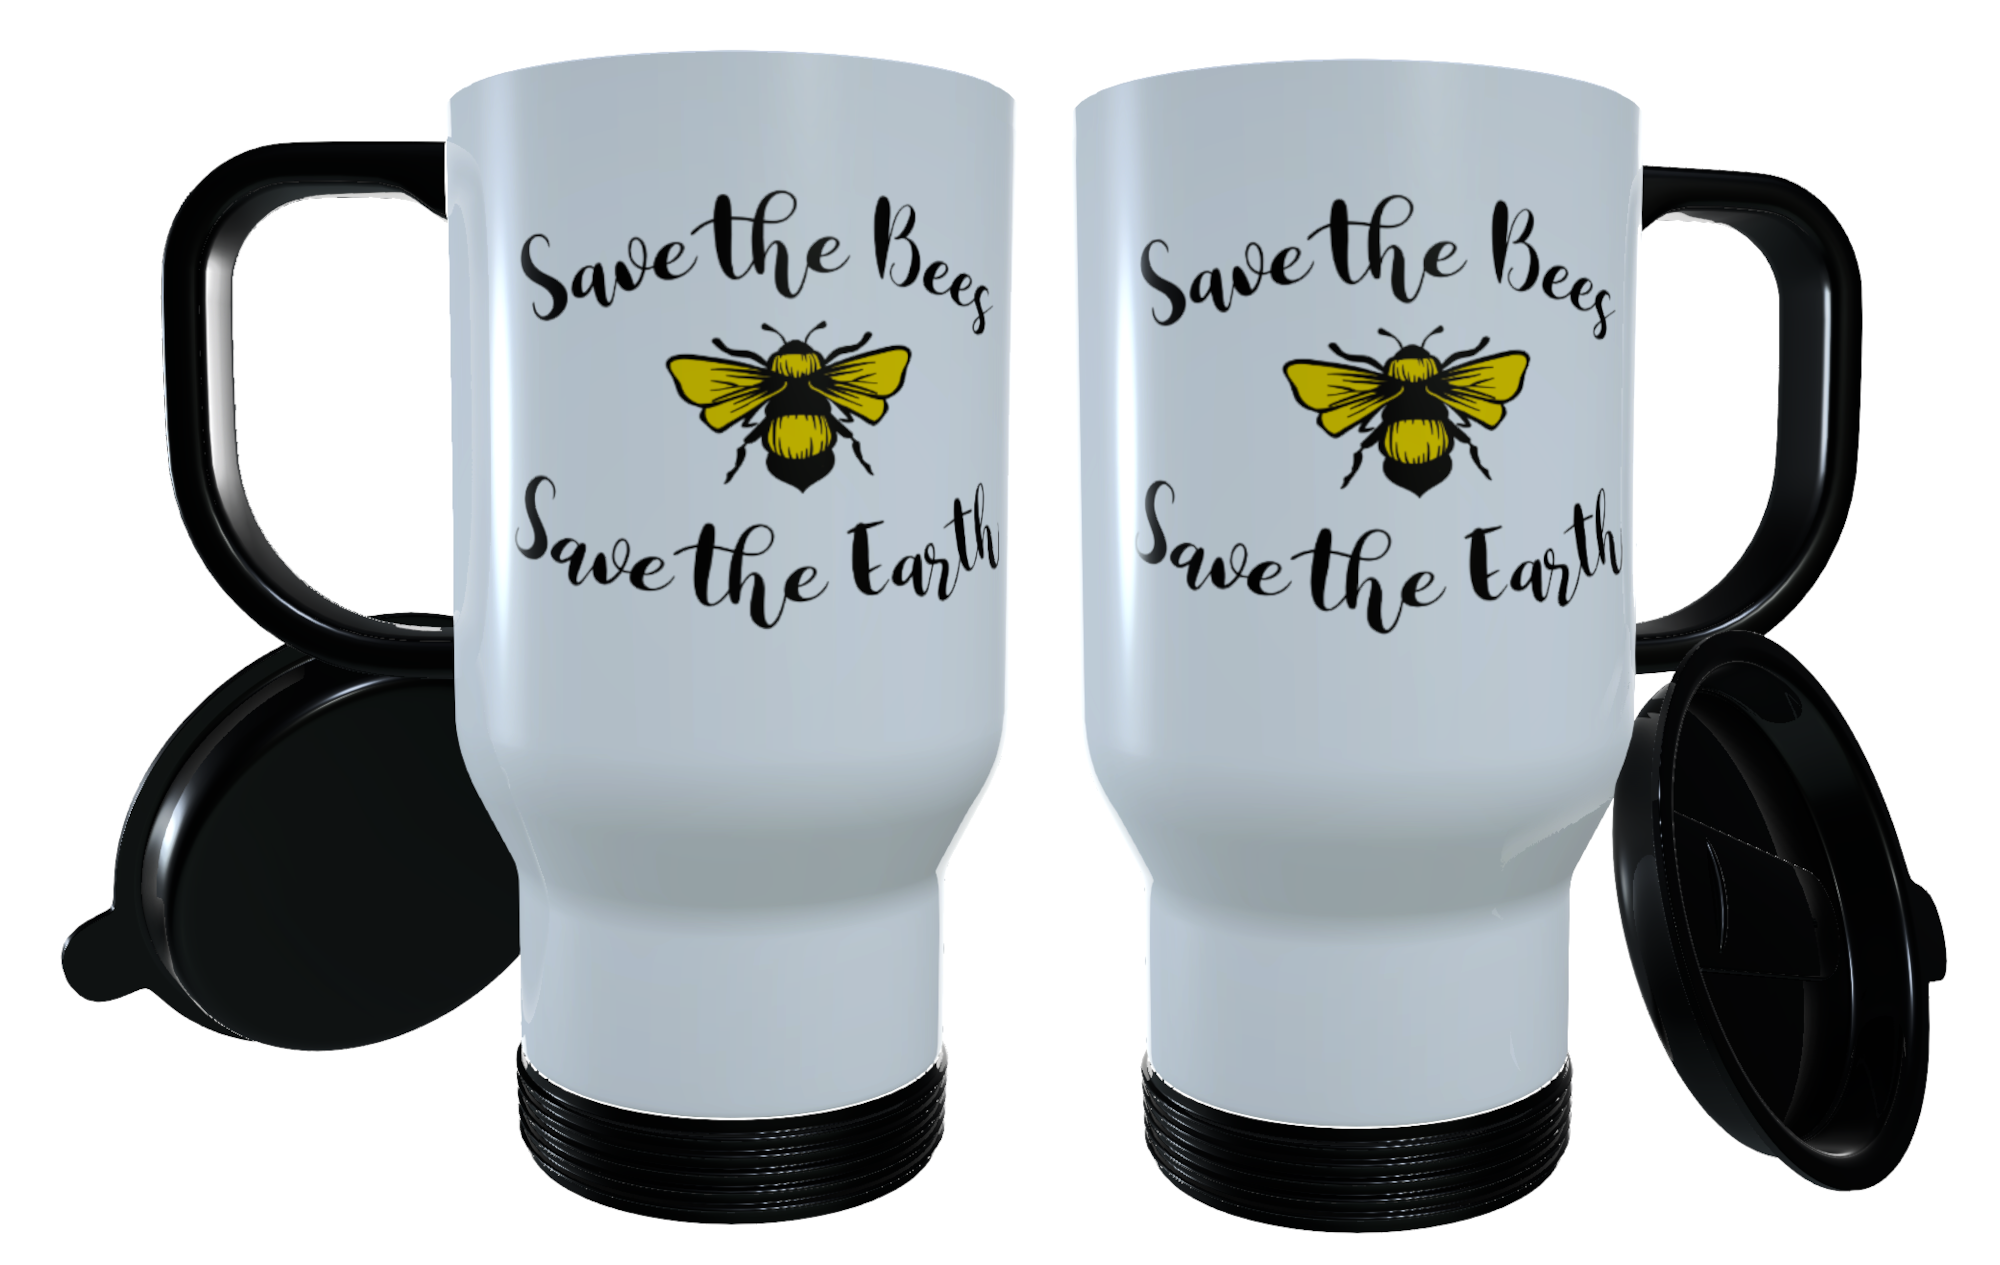 Bee Travel Mug - Save the Bees, Save the Earth